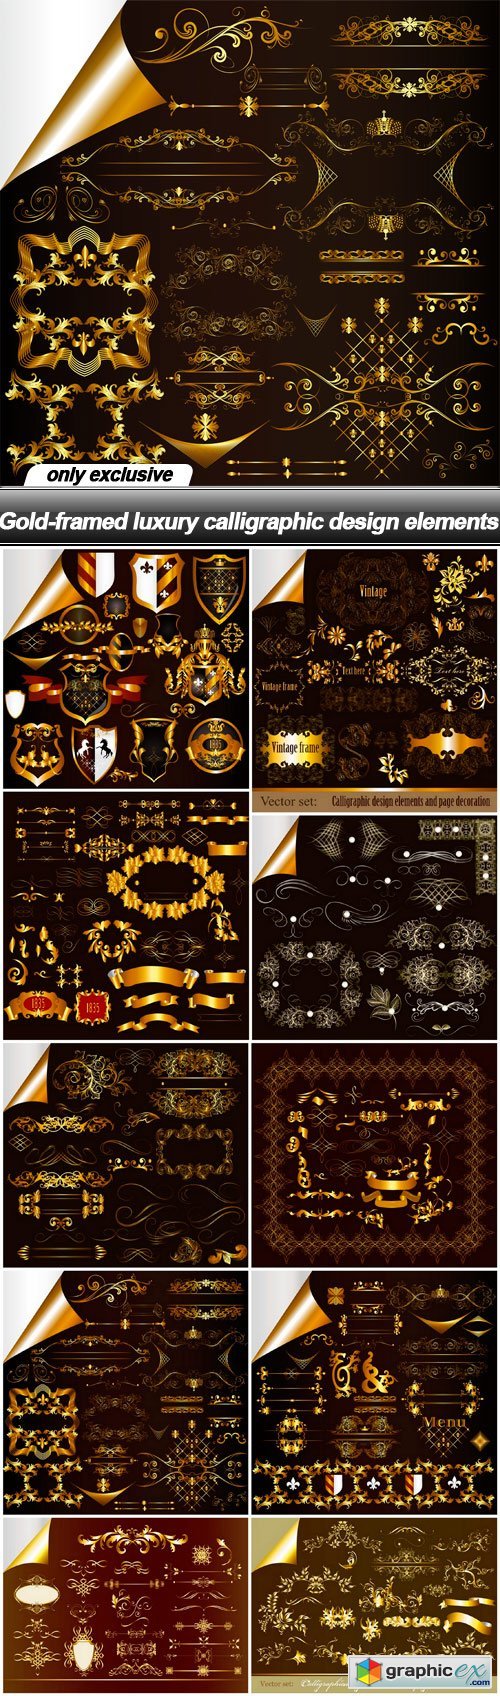 Gold-framed luxury calligraphic design elements - 10 EPS